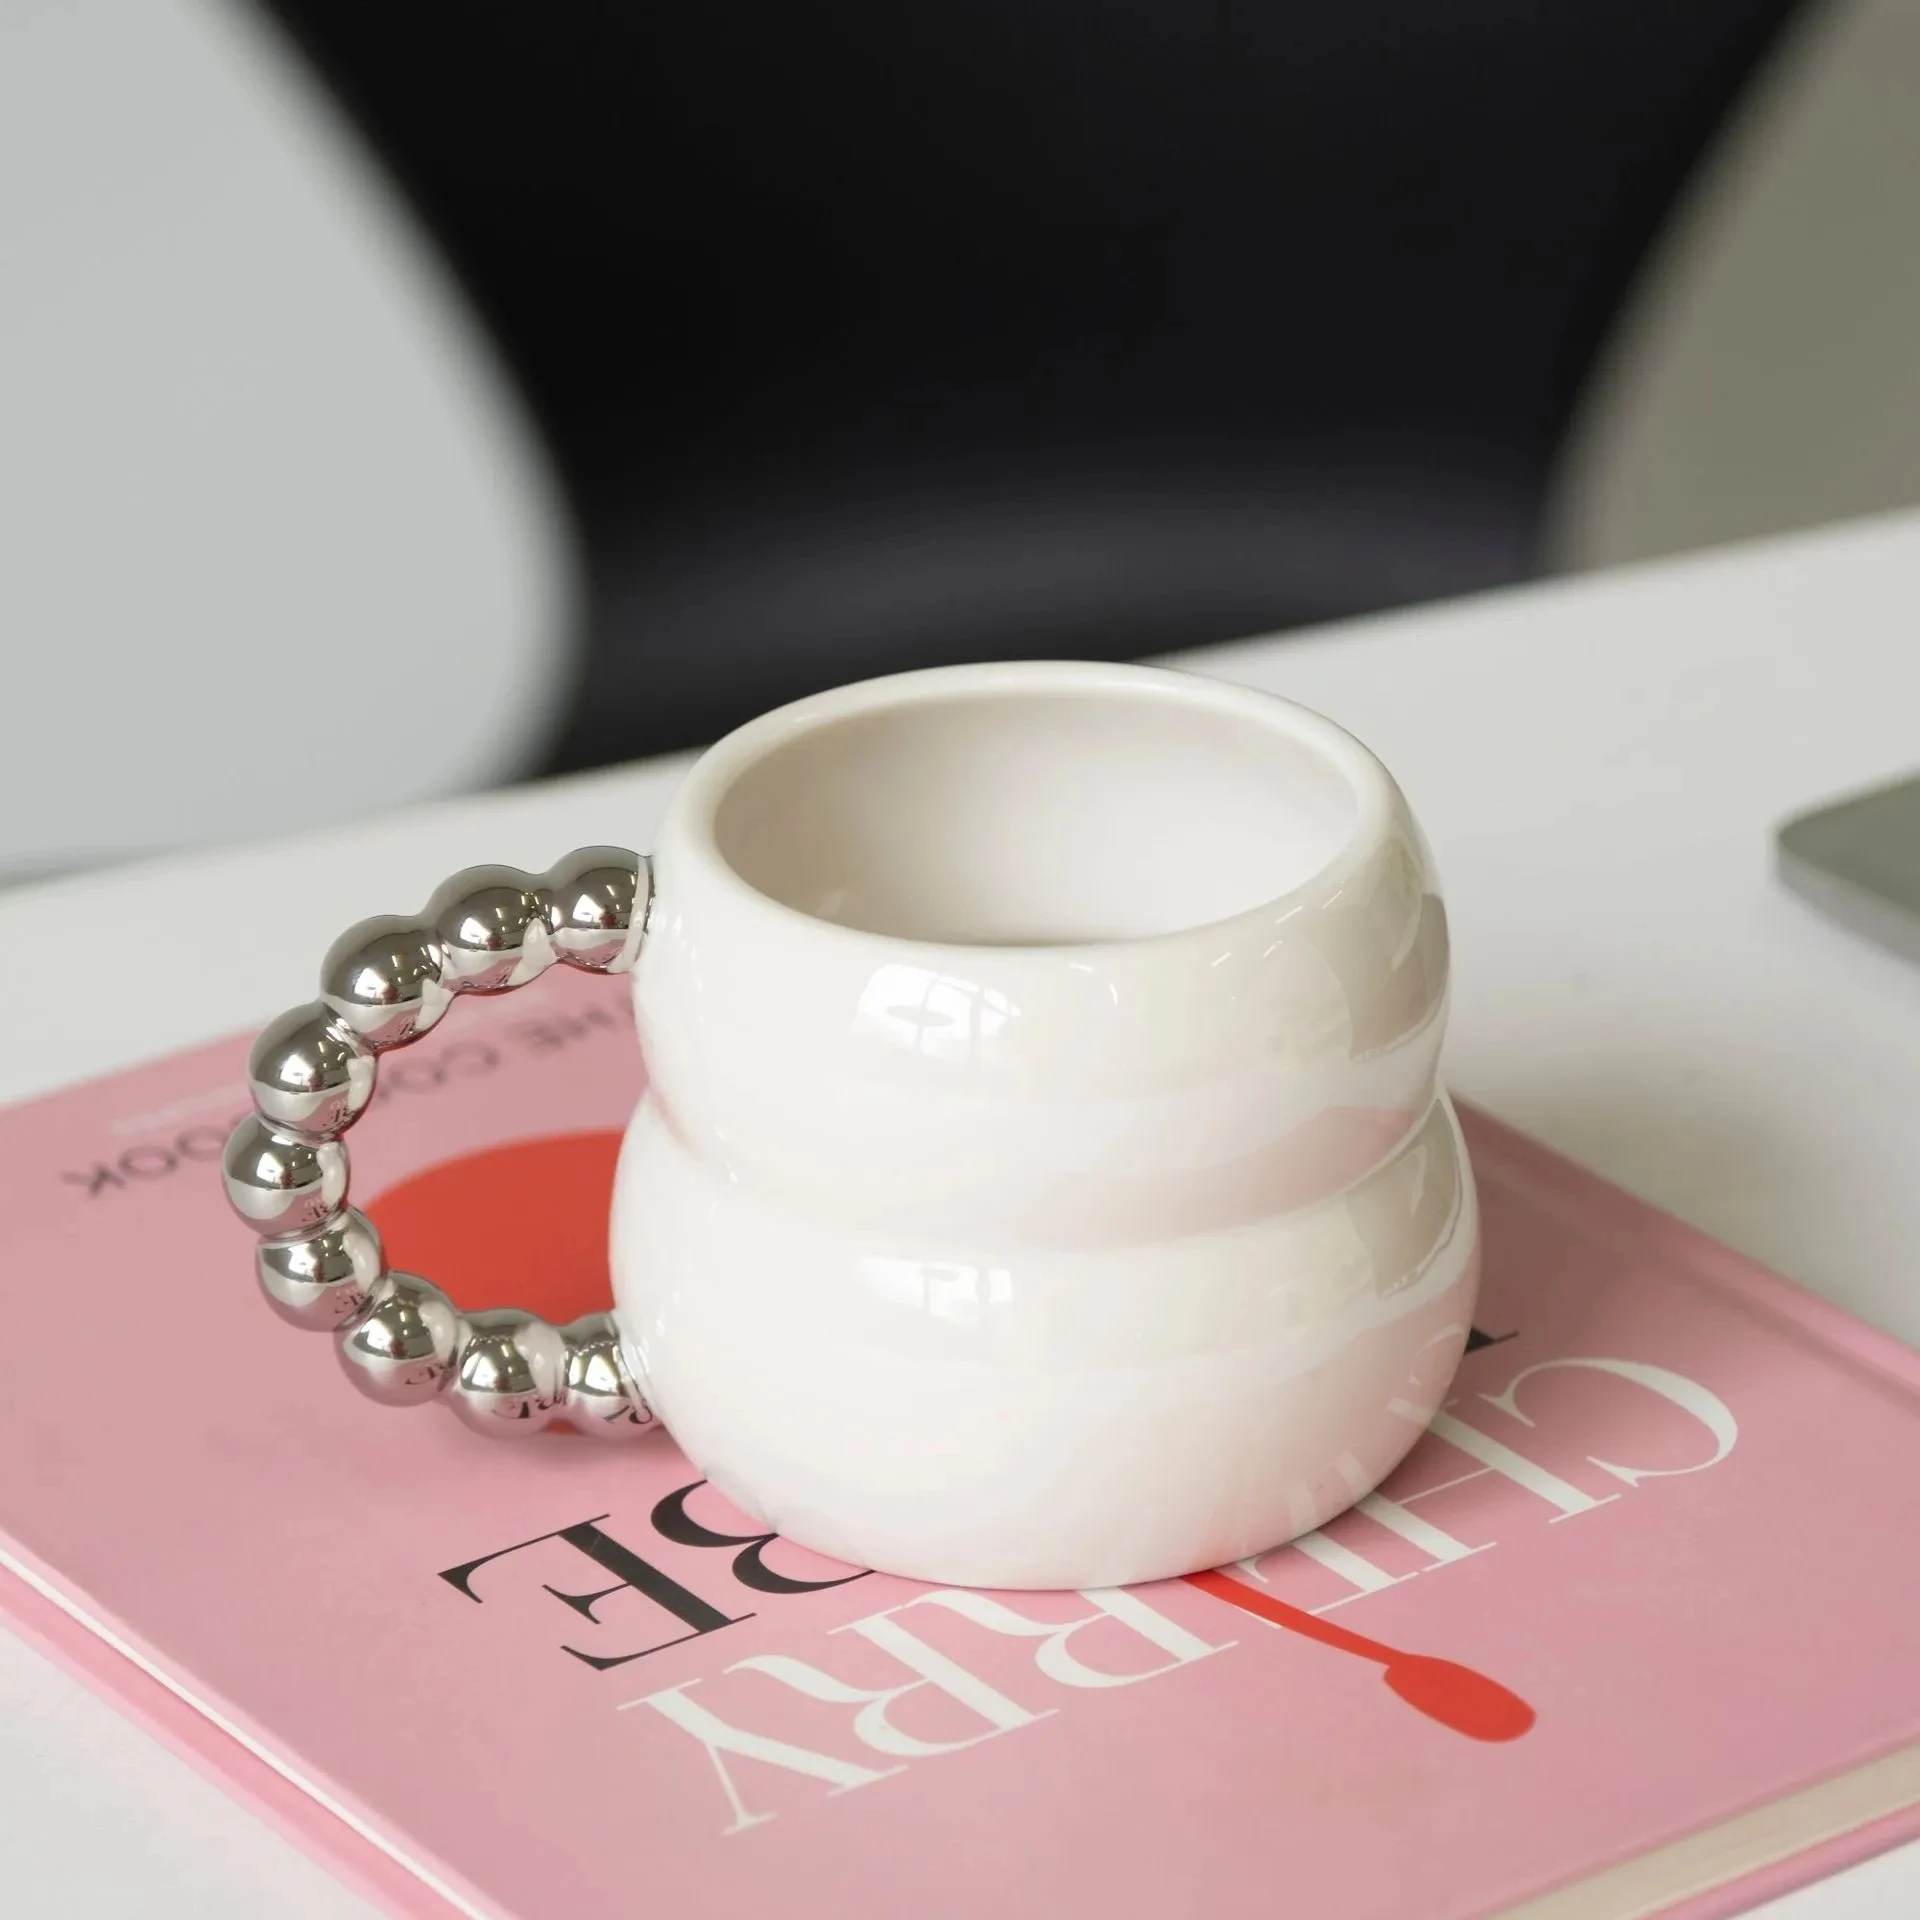 https://ae01.alicdn.com/kf/Sc12ab879f45c4a3fba6bc86e016c1d42K/Creative-Ceramic-Mug-Cute-Coffee-Cup-Nordic-Home-Decor-Handmade-Art-Milk-Tea-Cup-Home-Drinkware.jpg